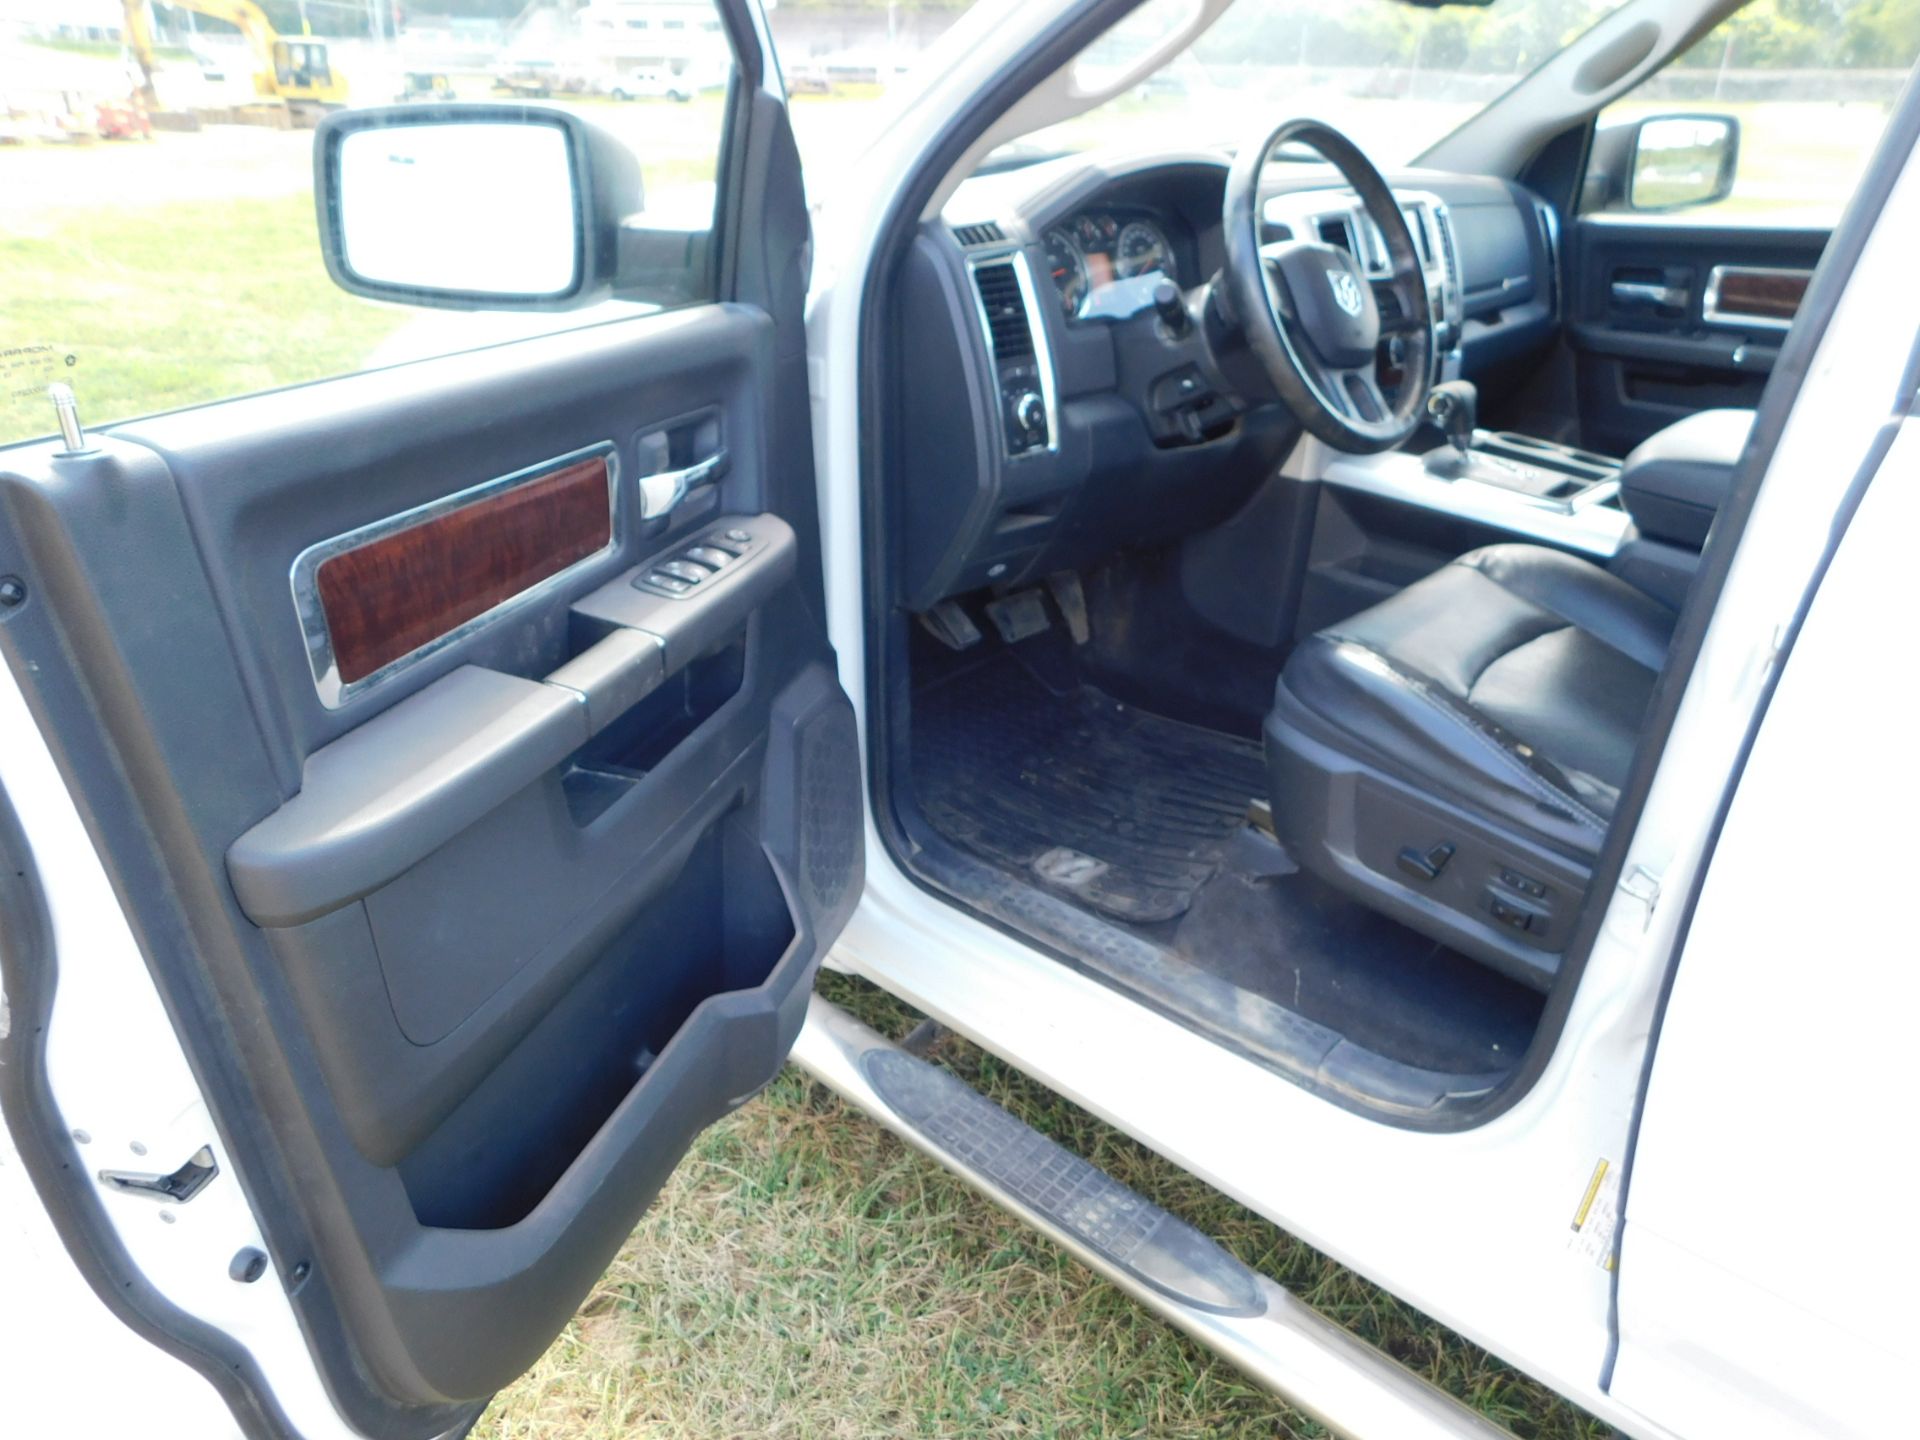 2012 Dodge Ram 1500 Pickup, Crew Cab, 6' Bed, Automatic, 4 WD, AM/FM,AC, PL, PW, Hemi 5.7 L - Image 24 of 53